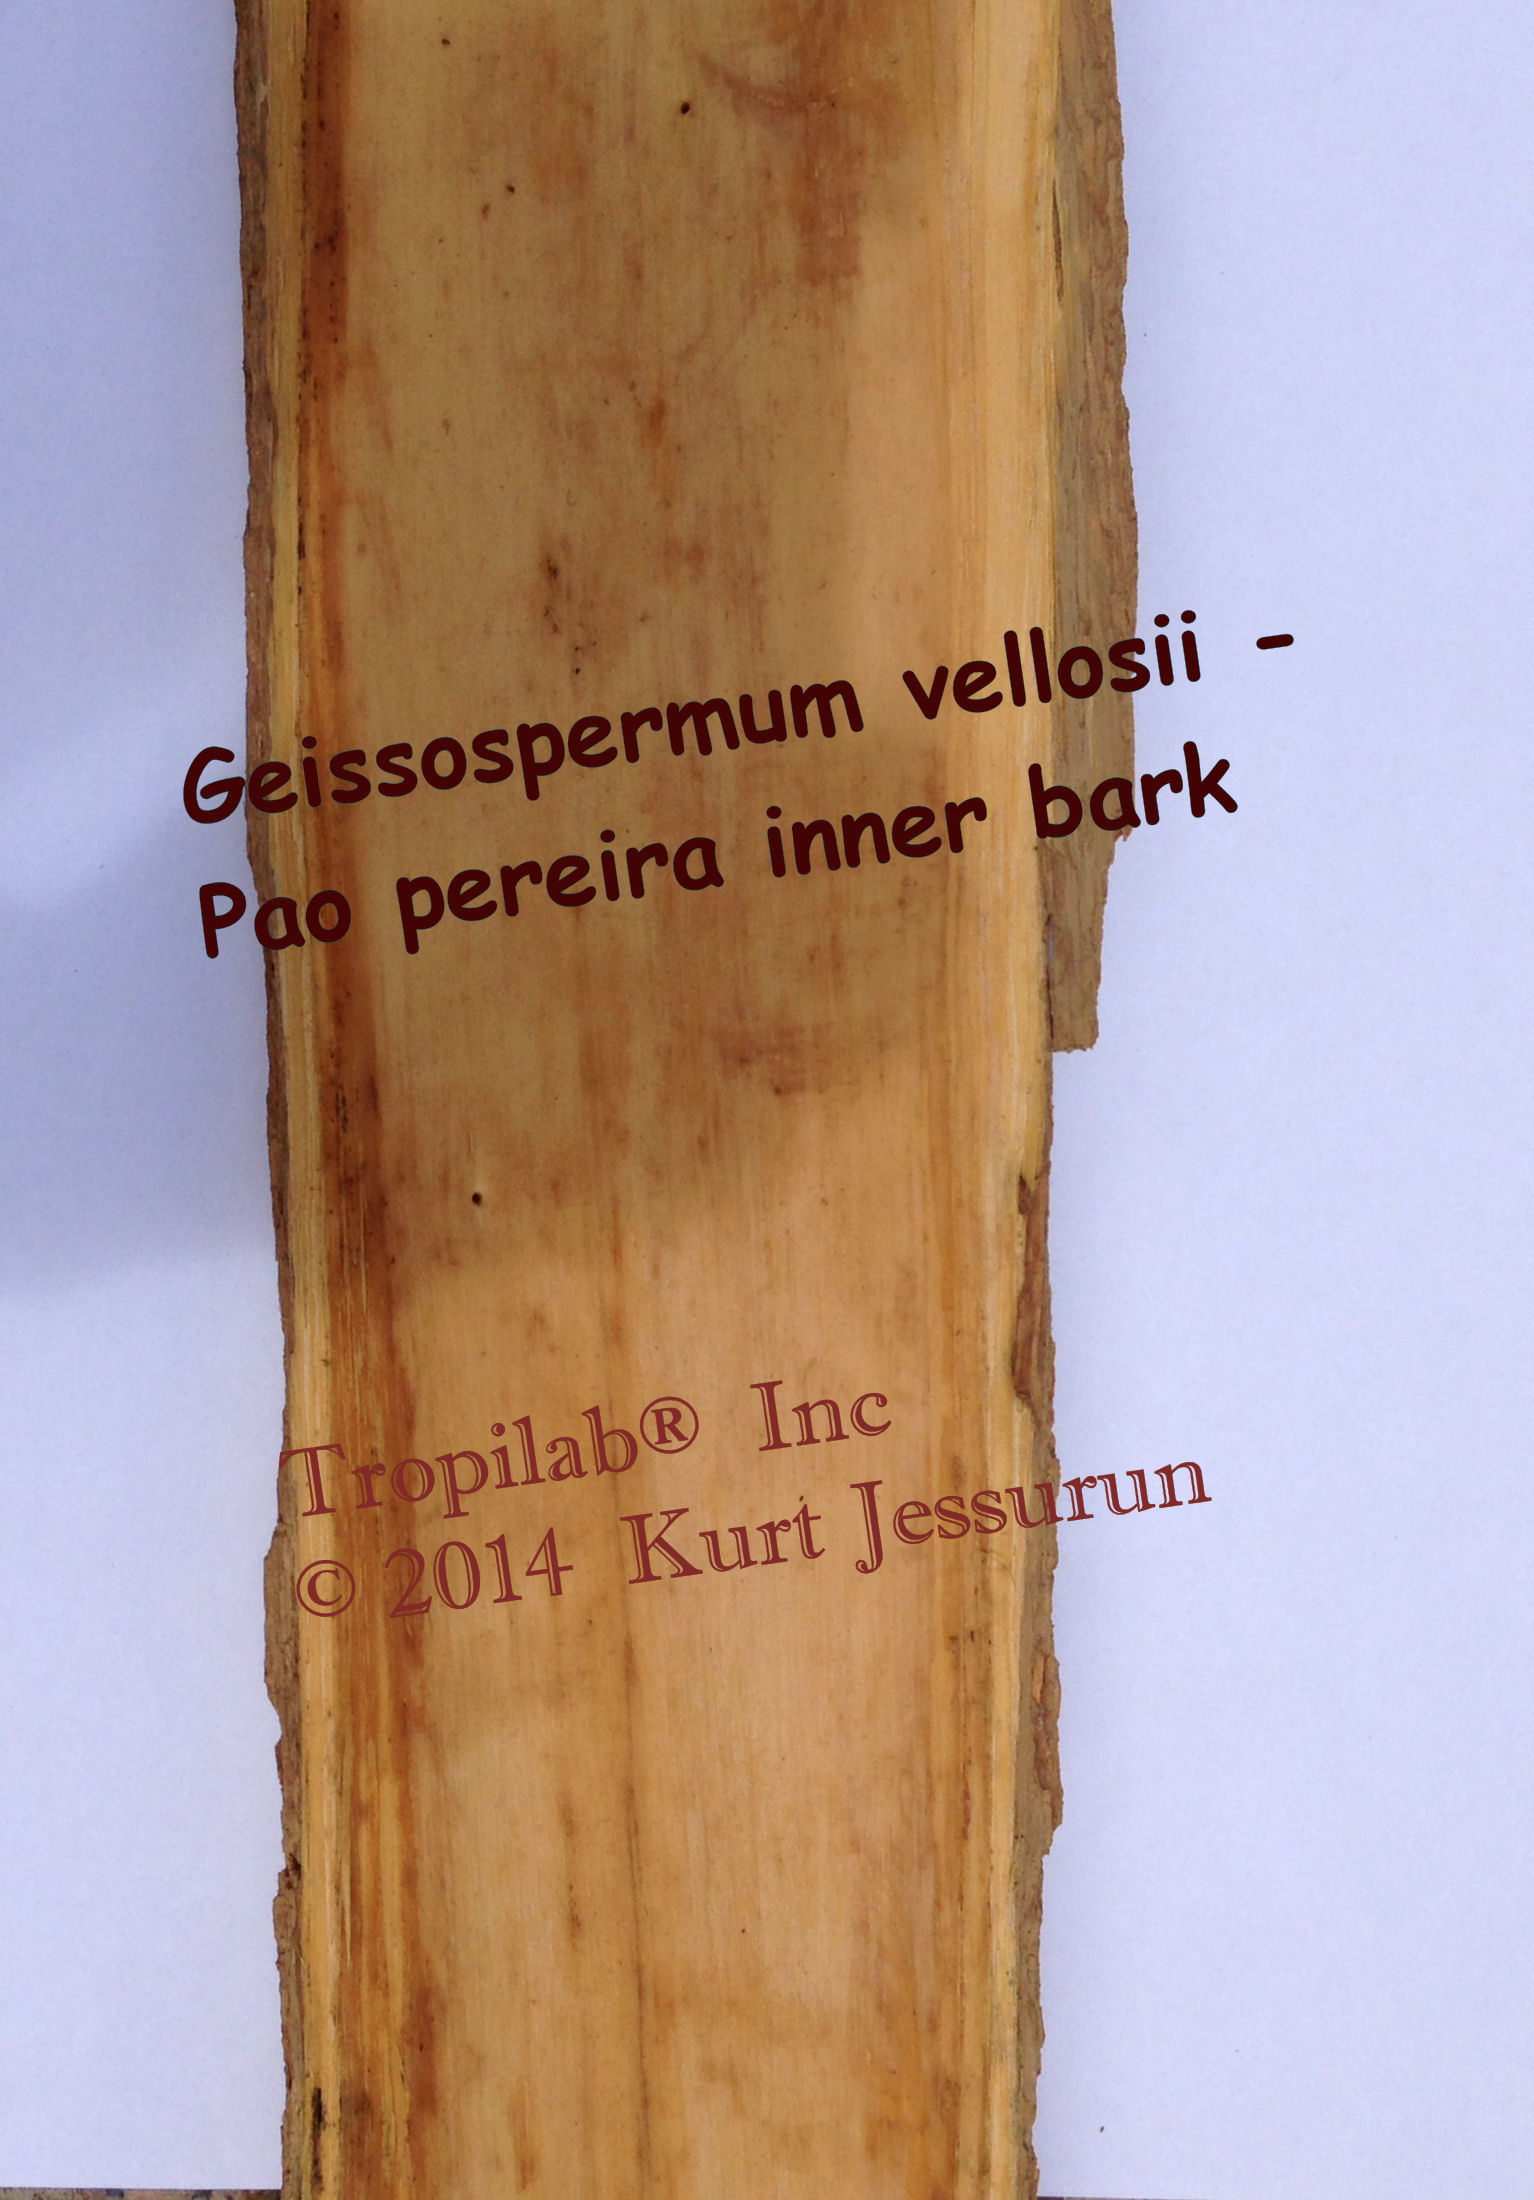 Geissospermum vellosii-Pao pereira inner bark - Tropilab Inc